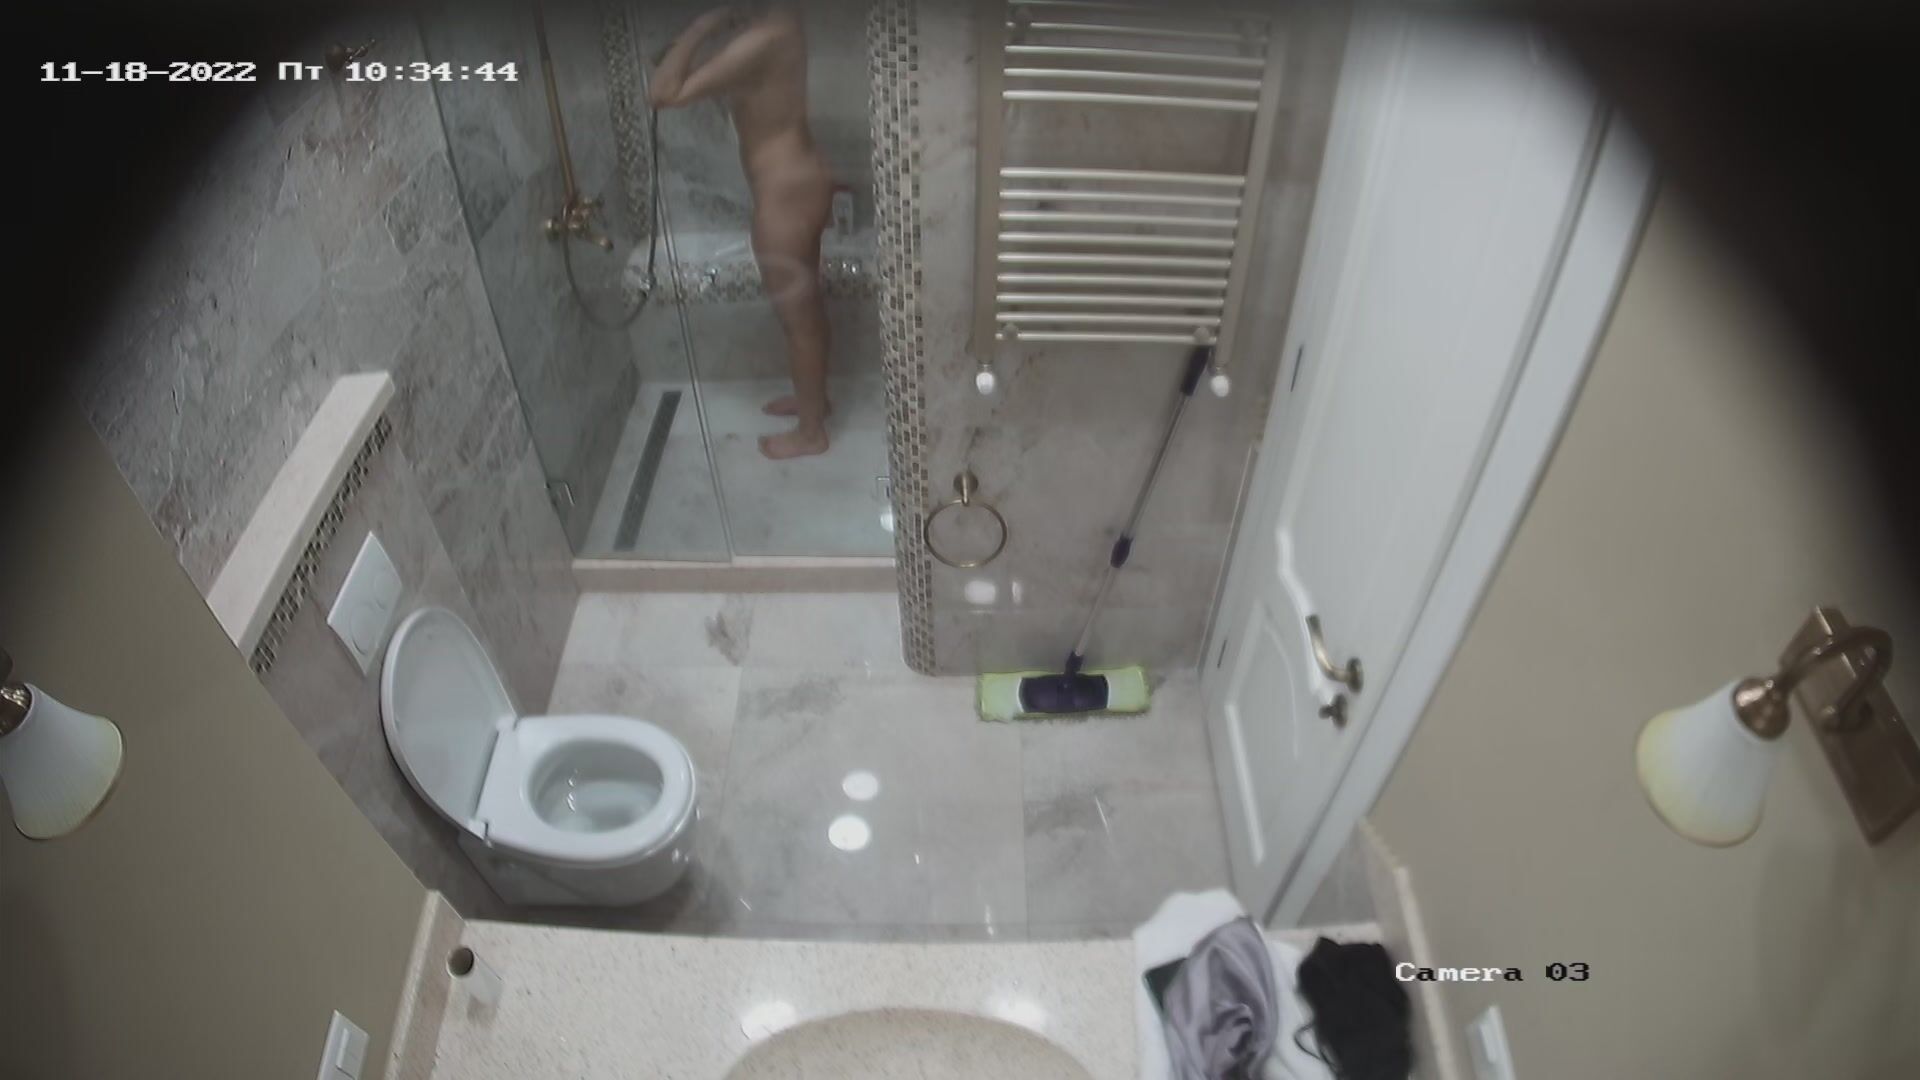 Dani daniels porn shower